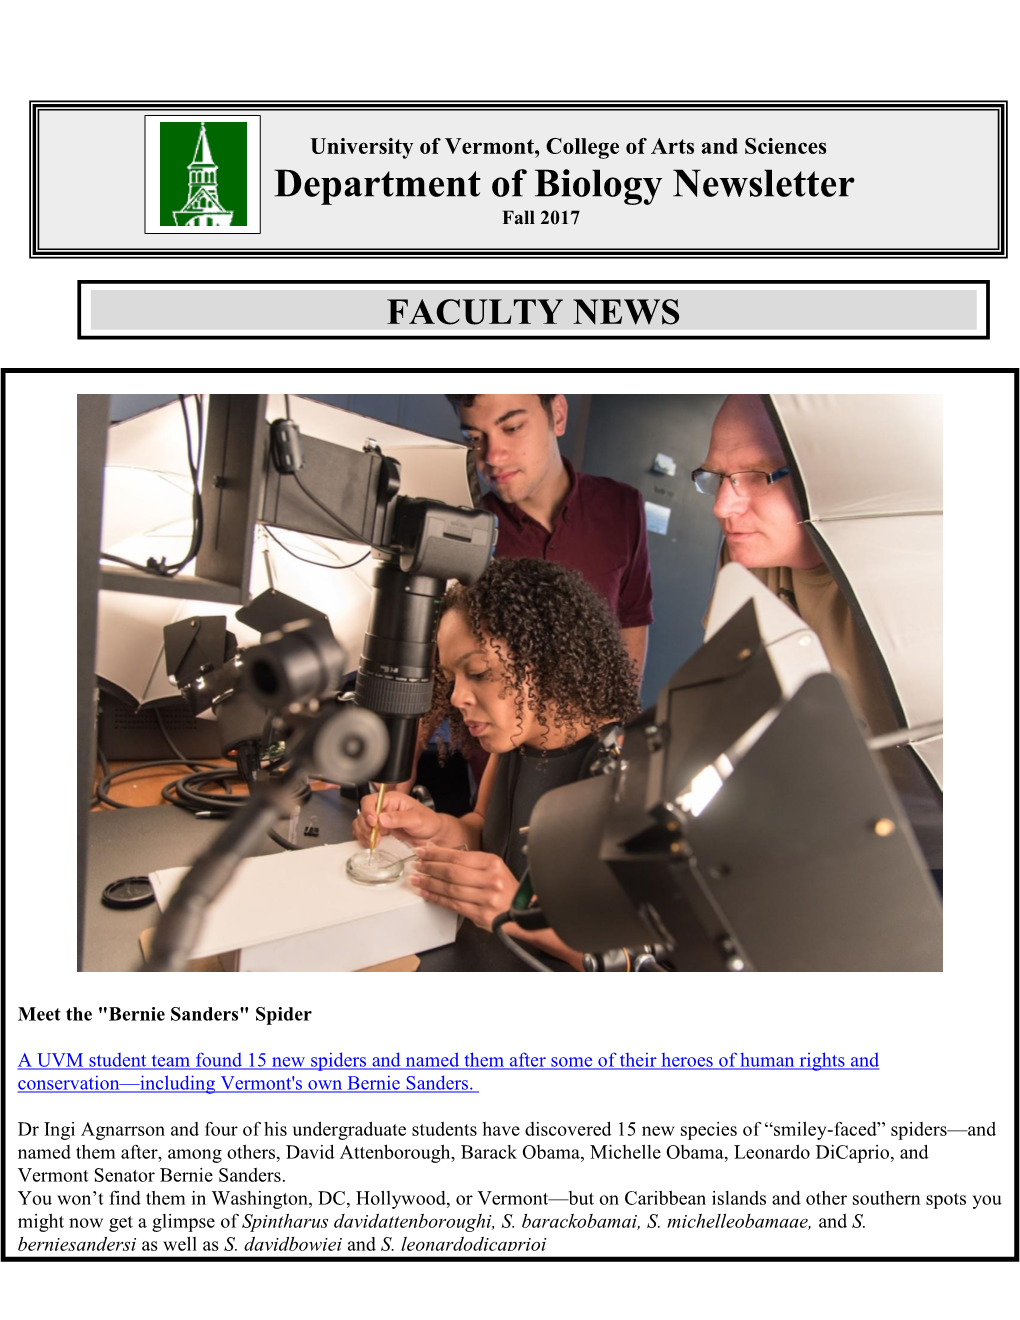 Department of Biology Newsletter Fall 2017